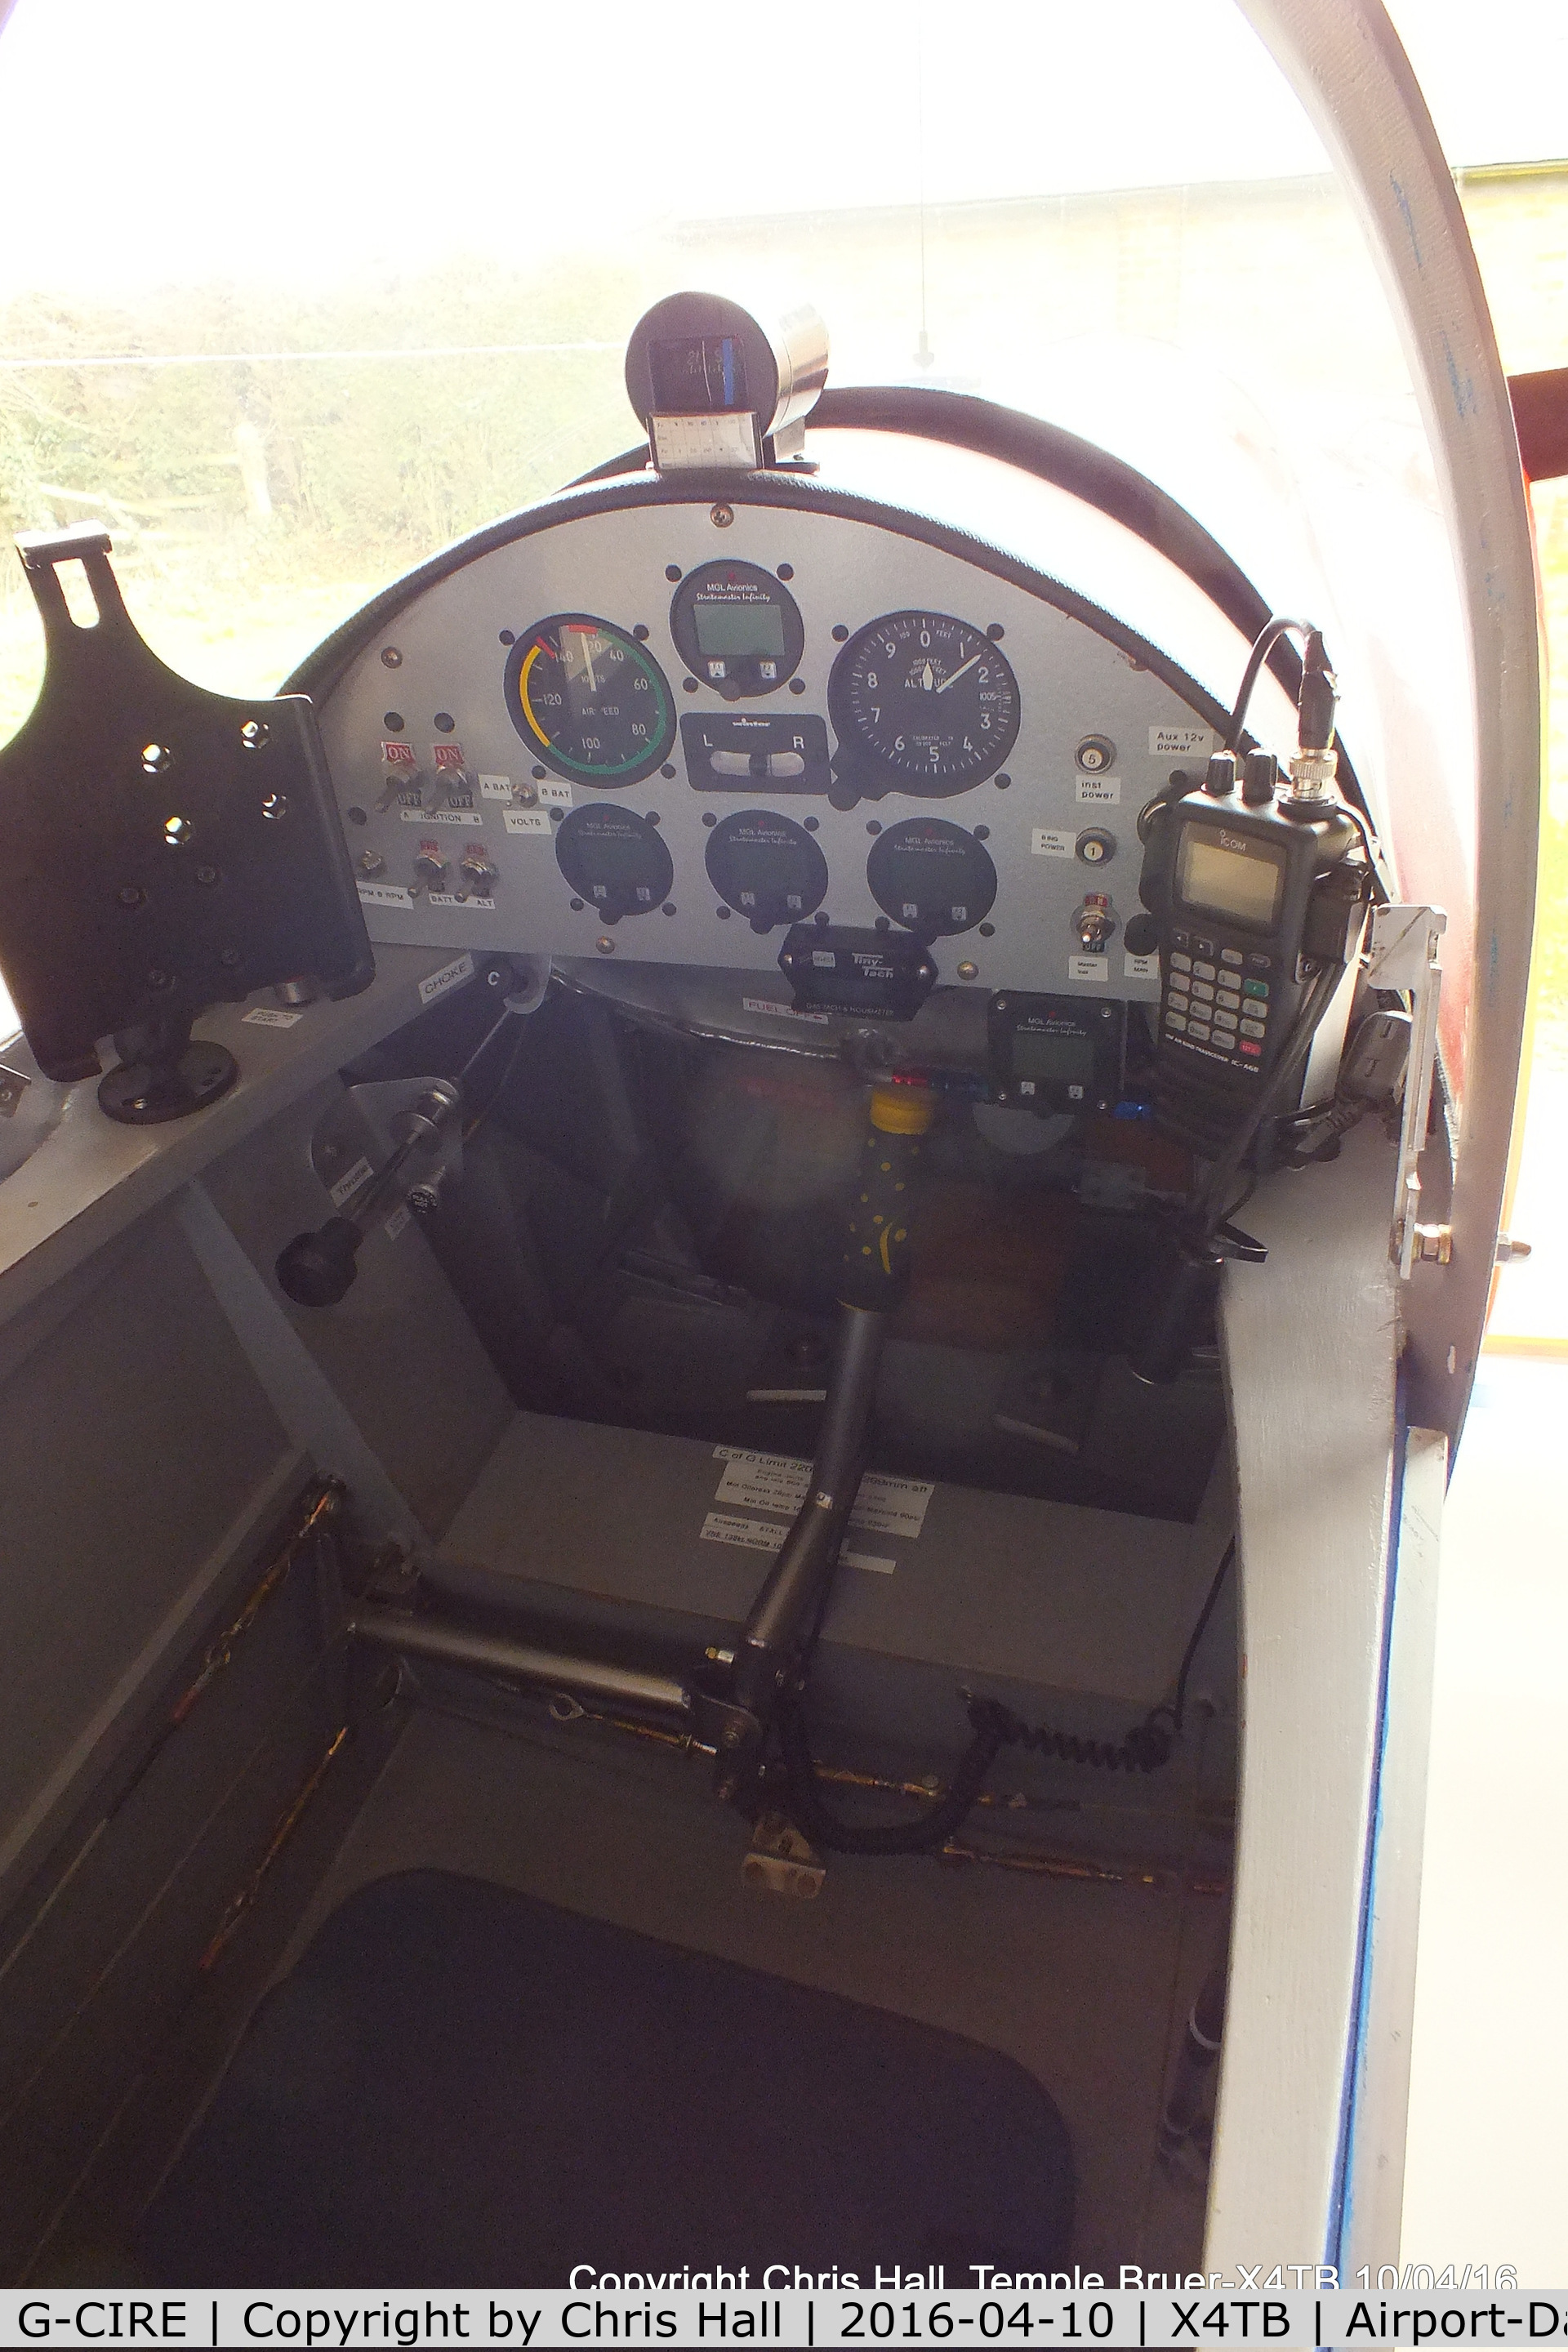 G-CIRE, 2015 Corby CJ-1 Starlet C/N LAA 134-14806, Cockpit of John Evans little Corby Starlet